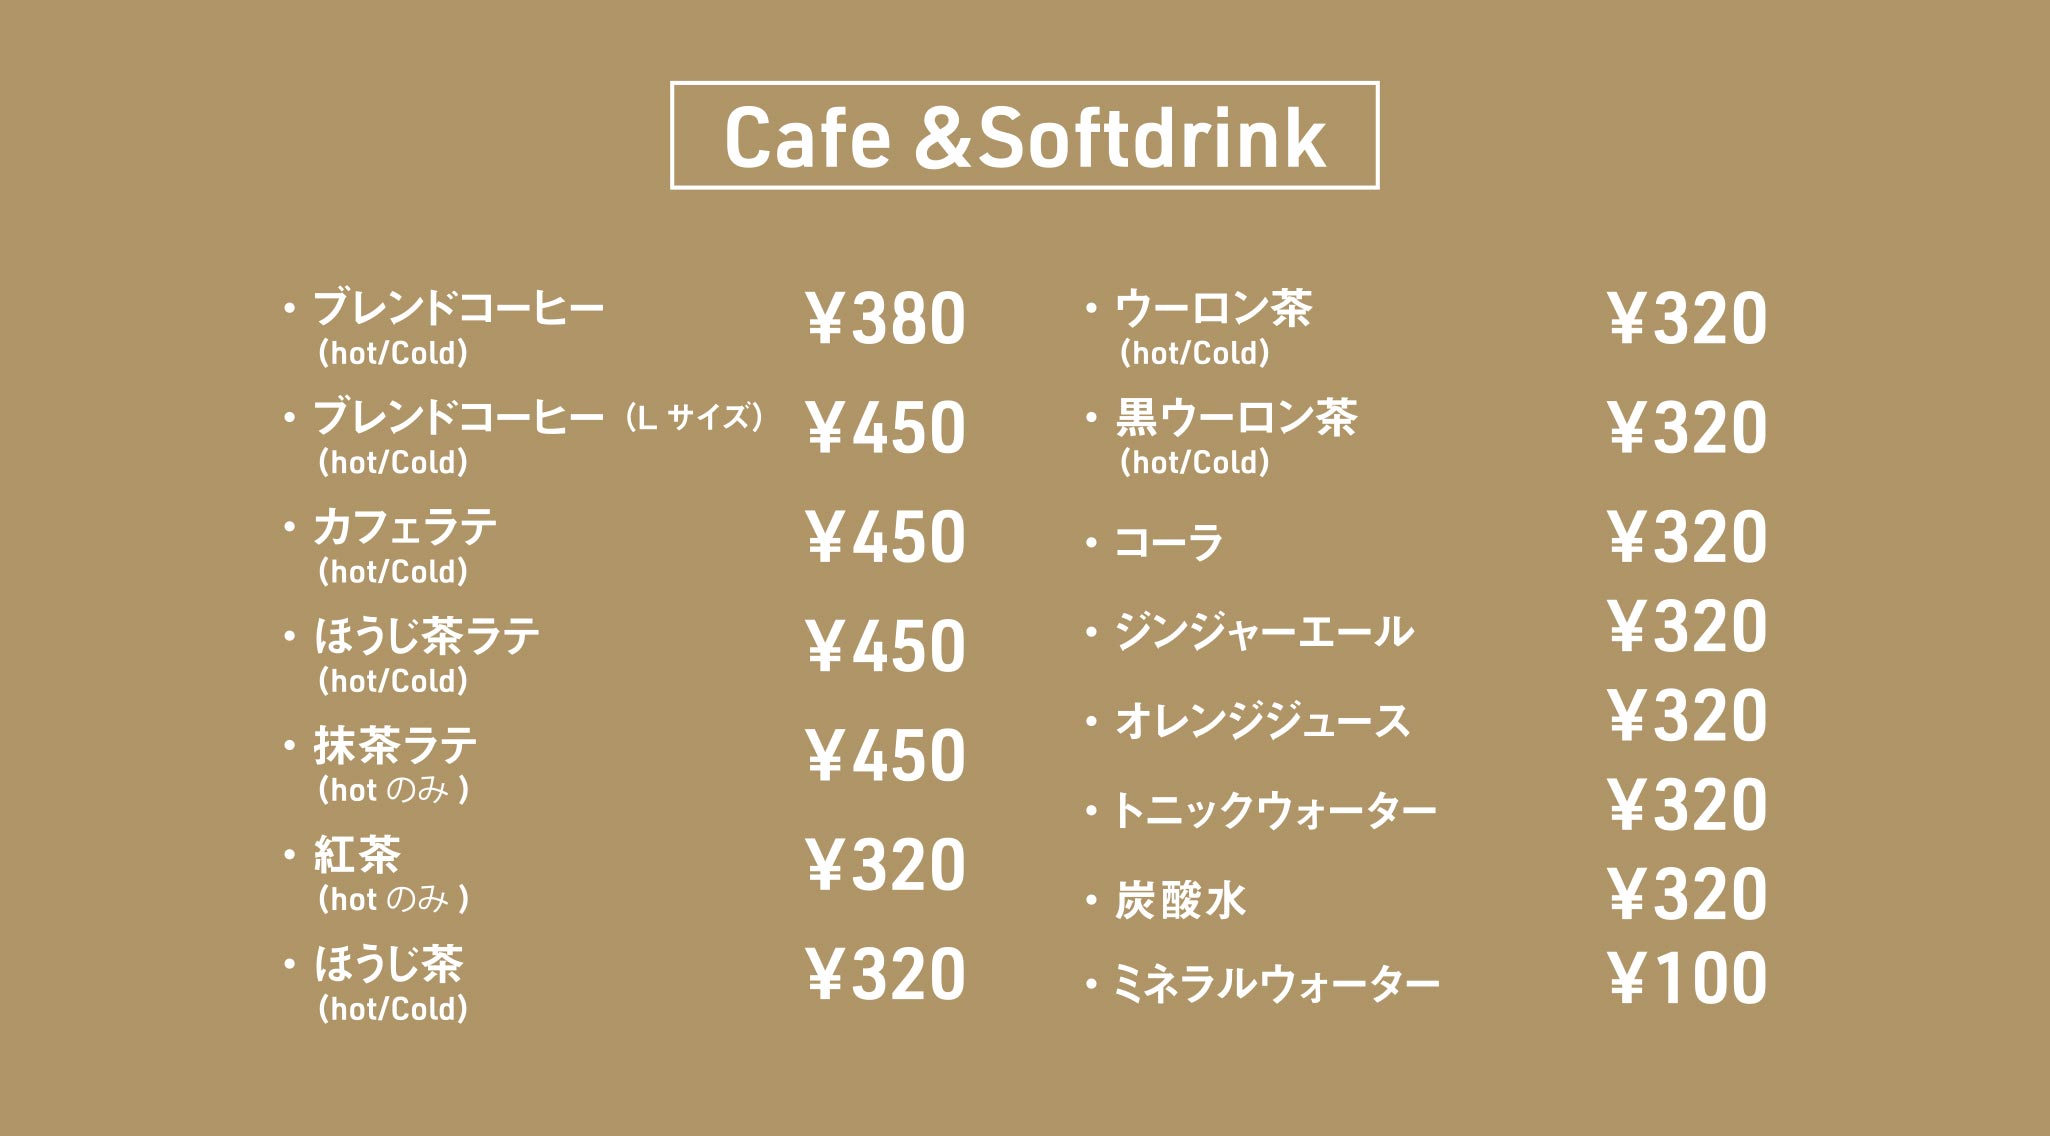 Cafe & Softdrink